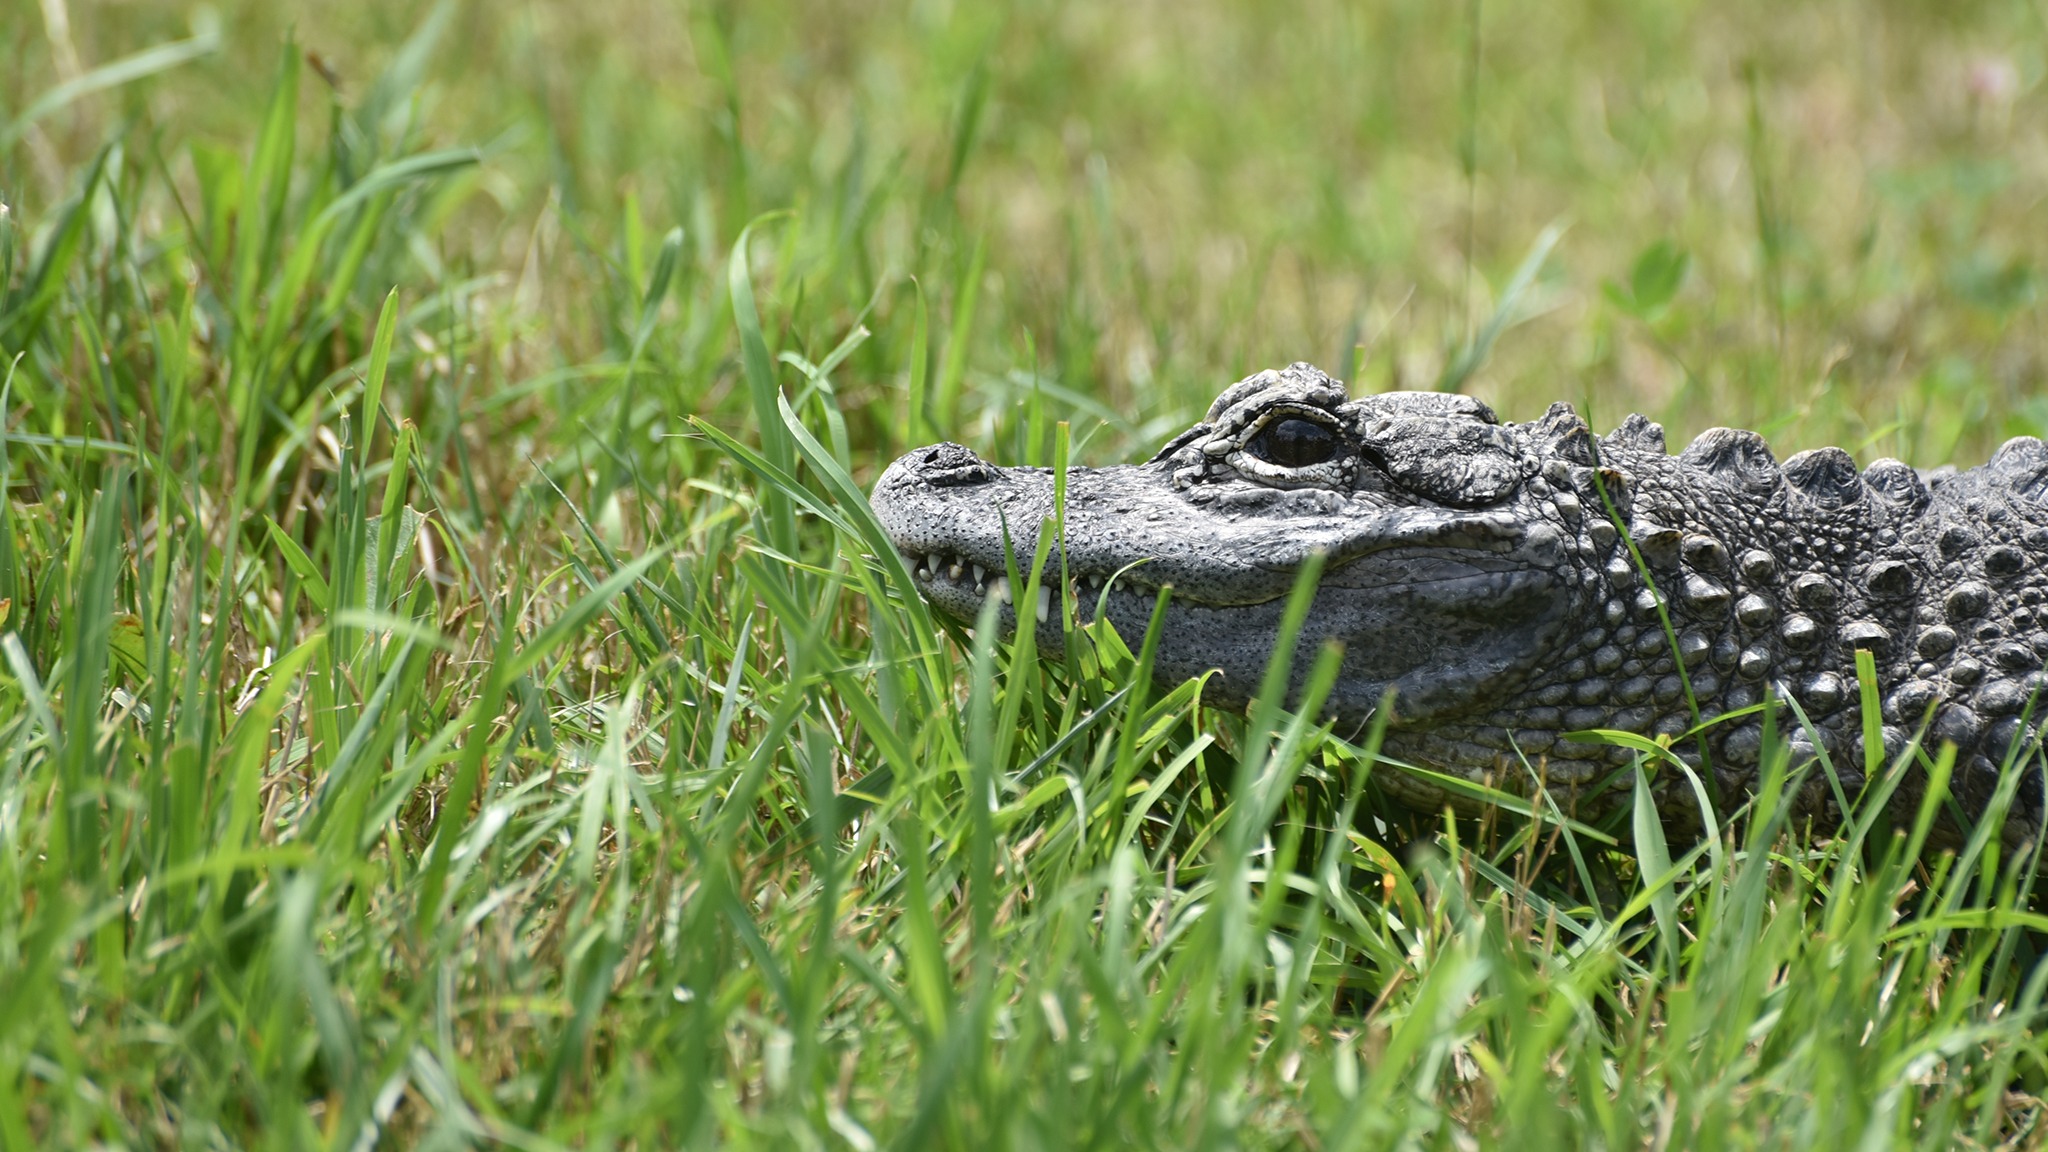 Crocodile laying on grass